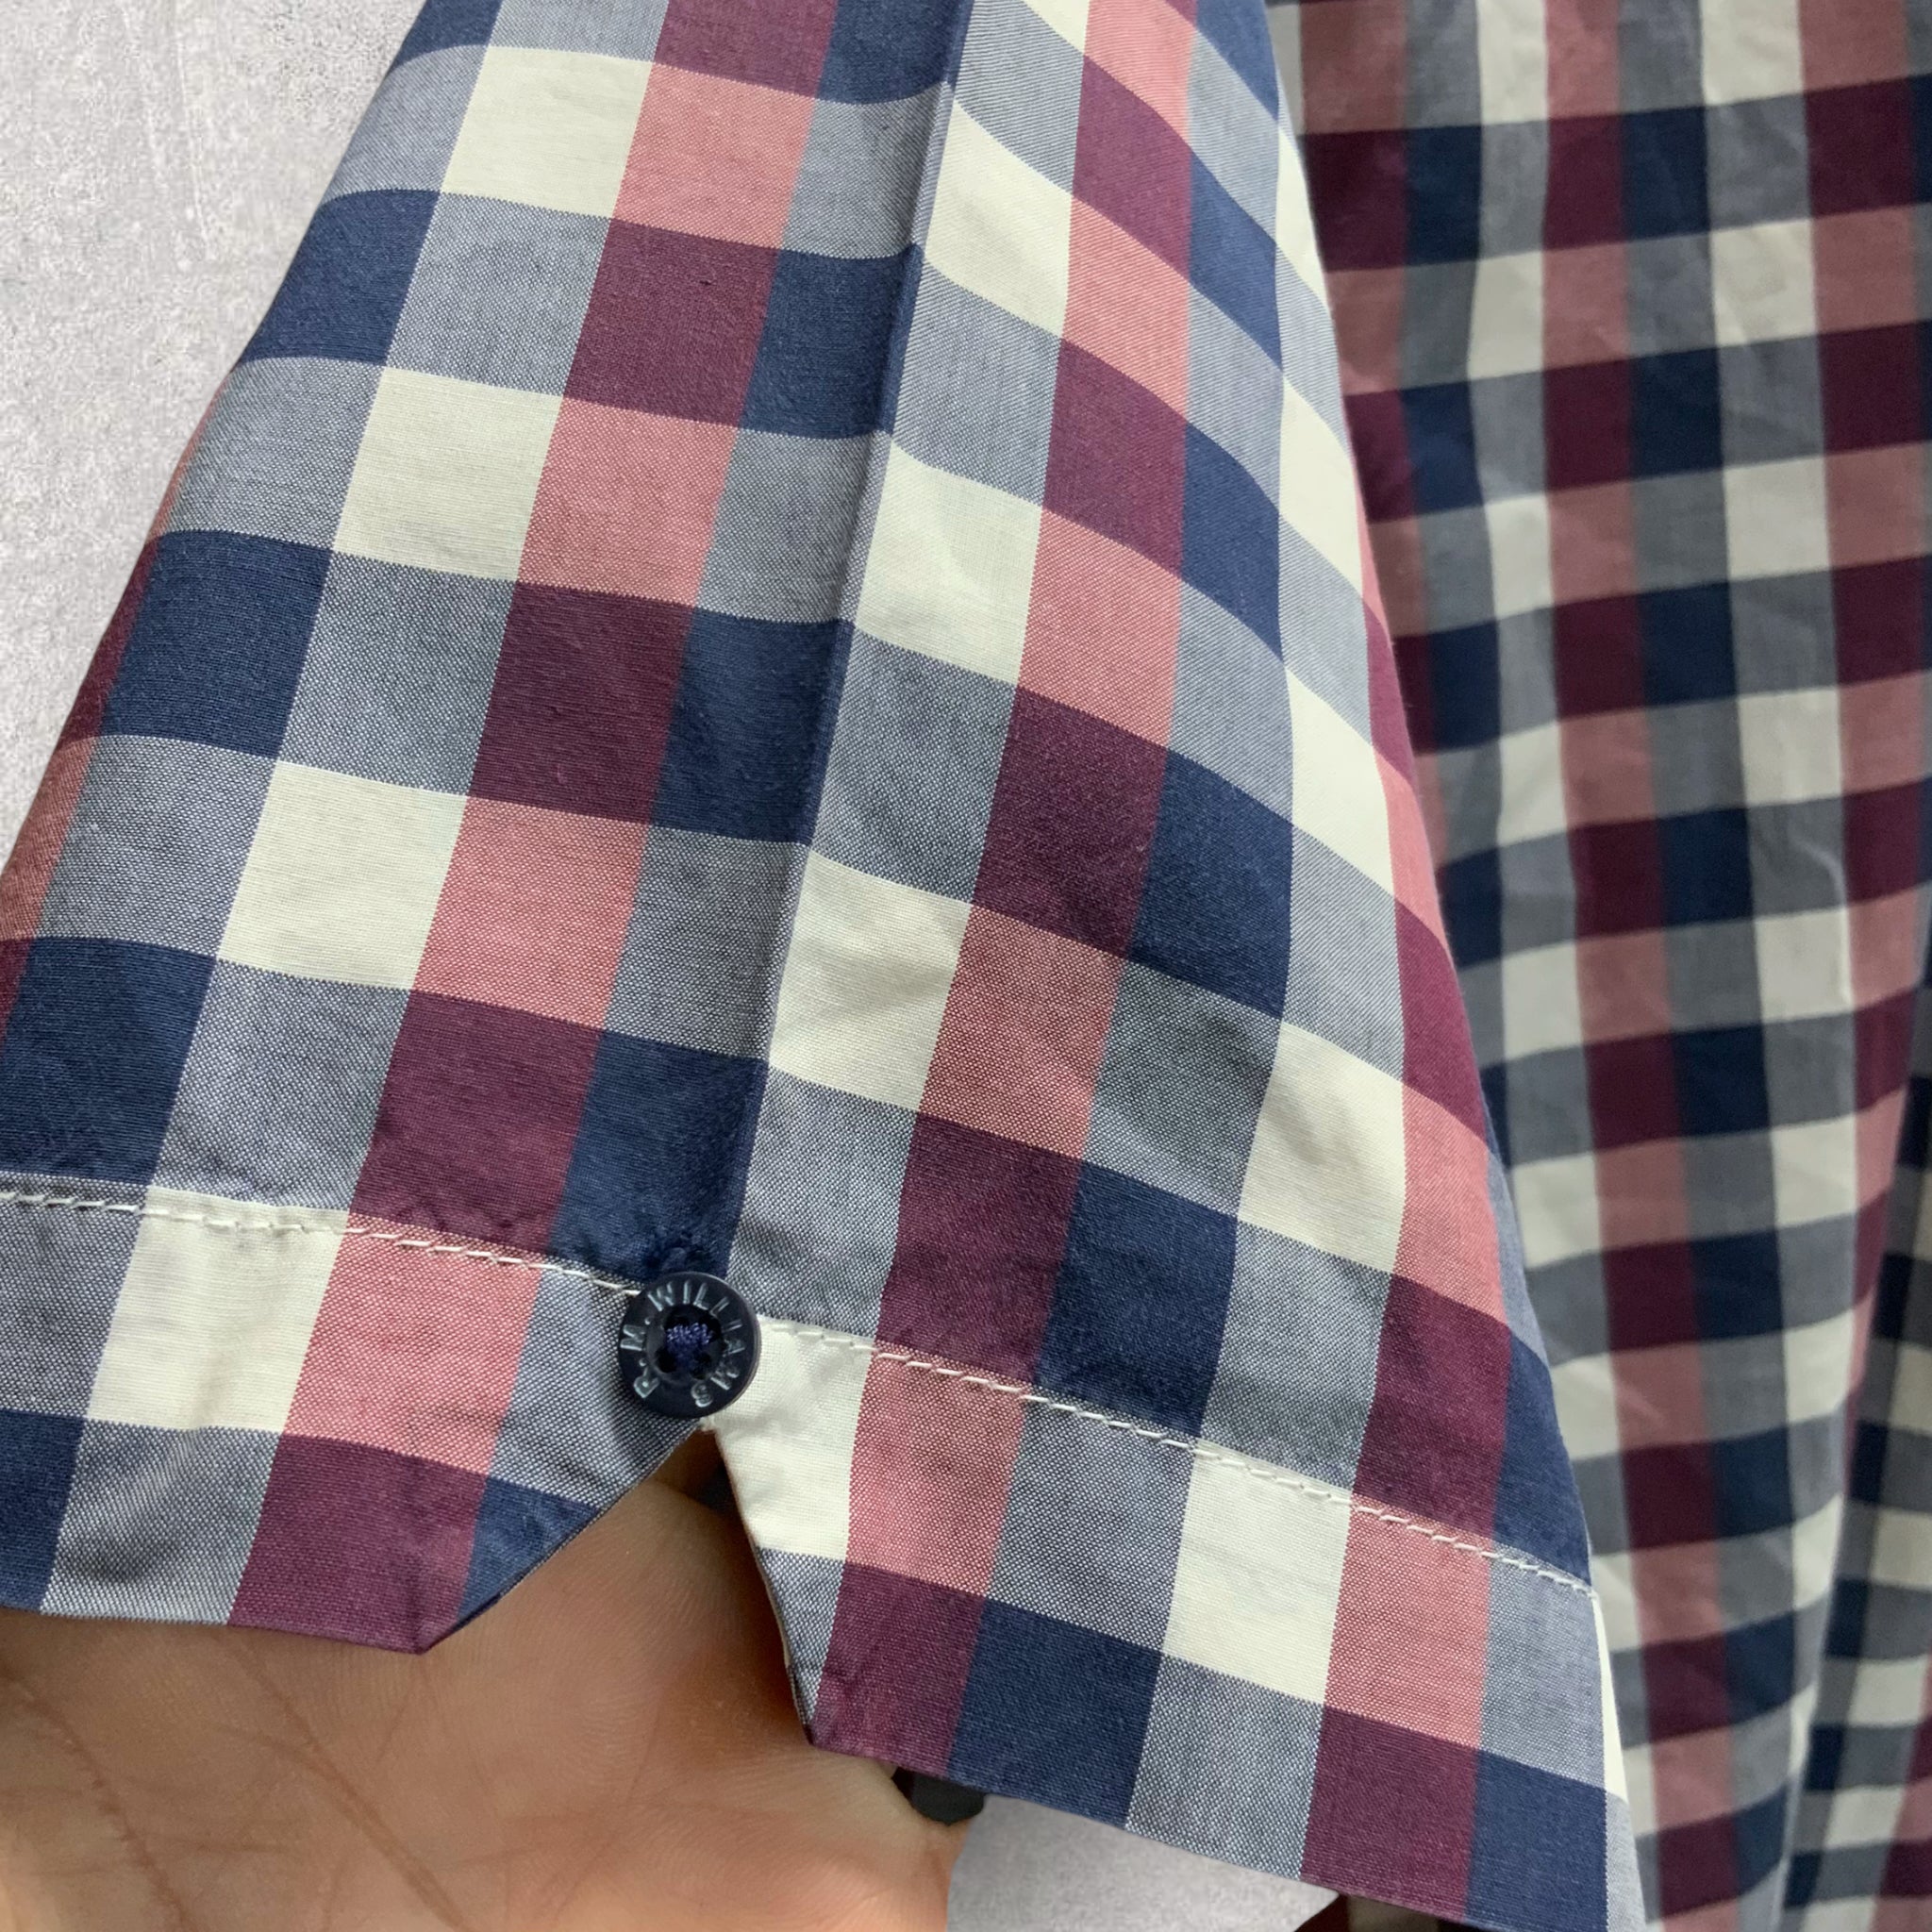 RM WILLIAMS Mens Short Sleeved Gingham Shirt - Size XL